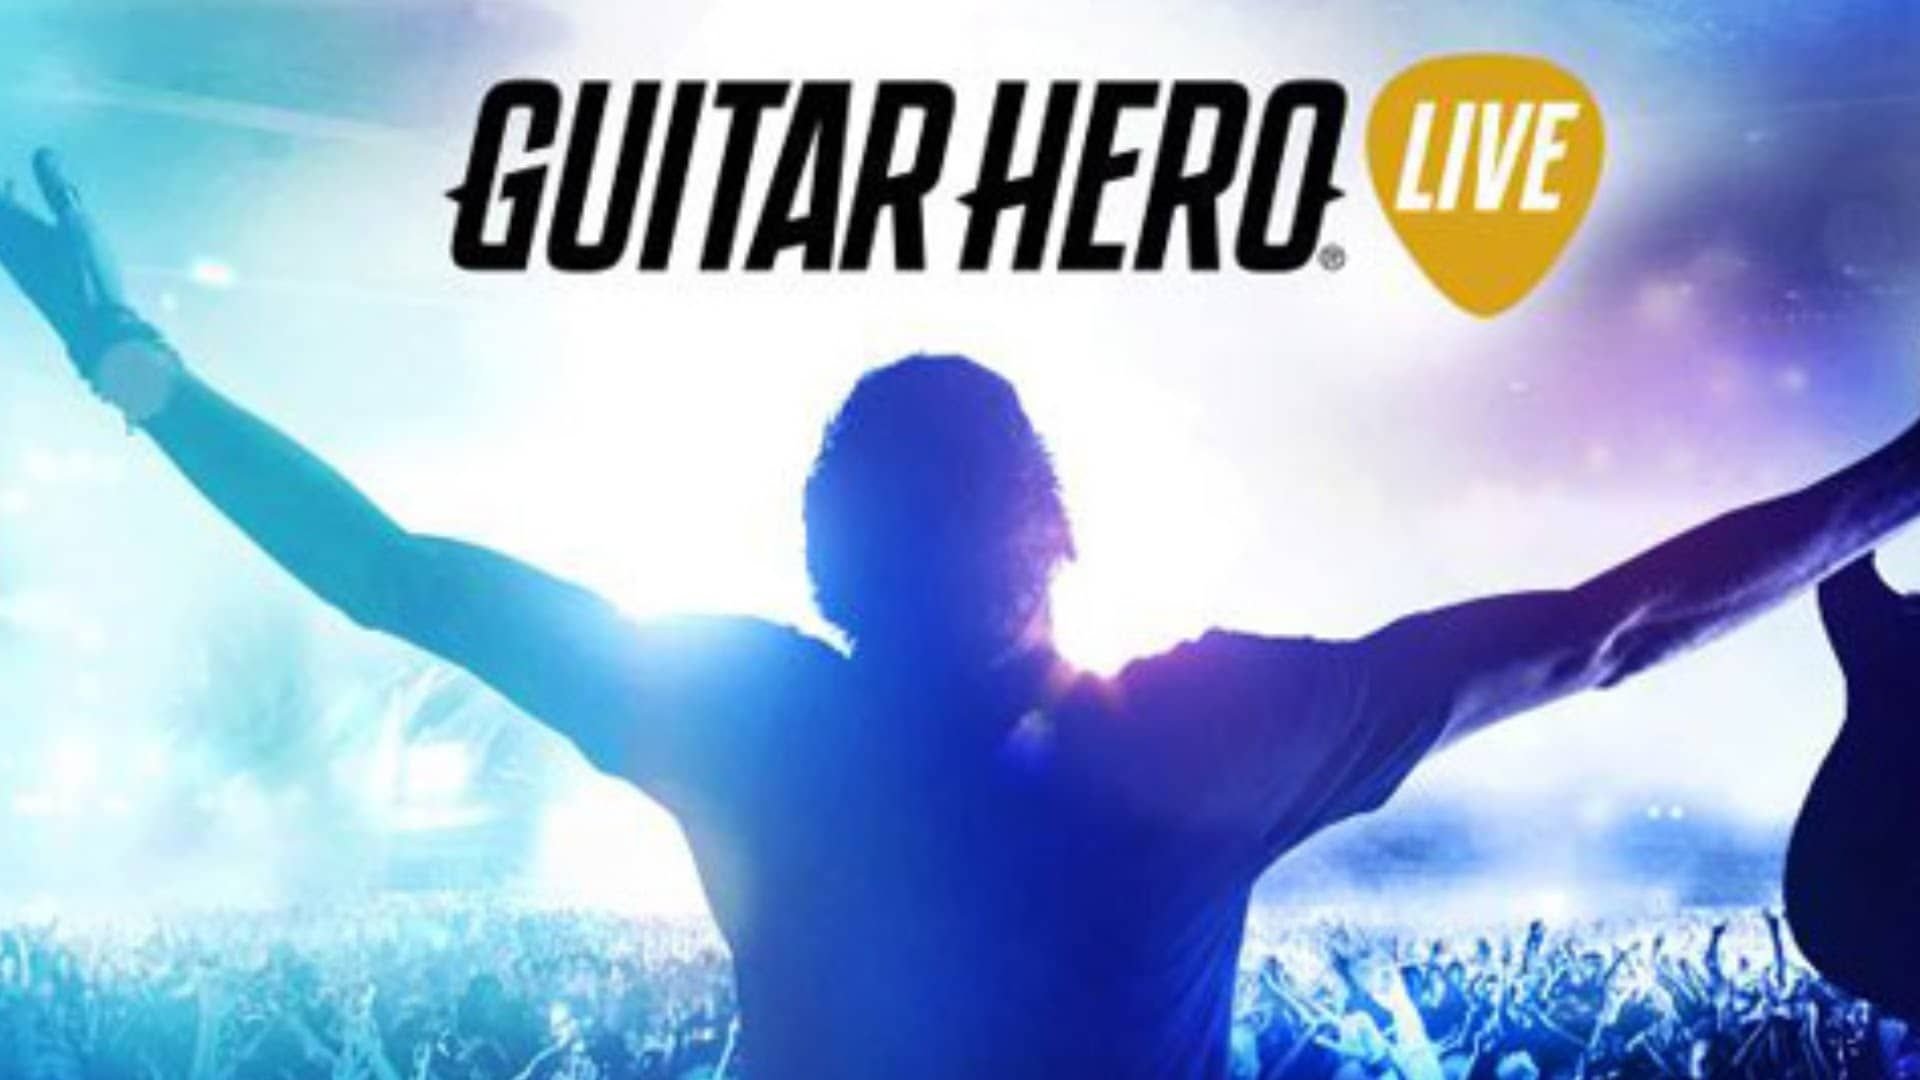 Challenge Trophée - Guitar Hero Live : "Bonne impression"